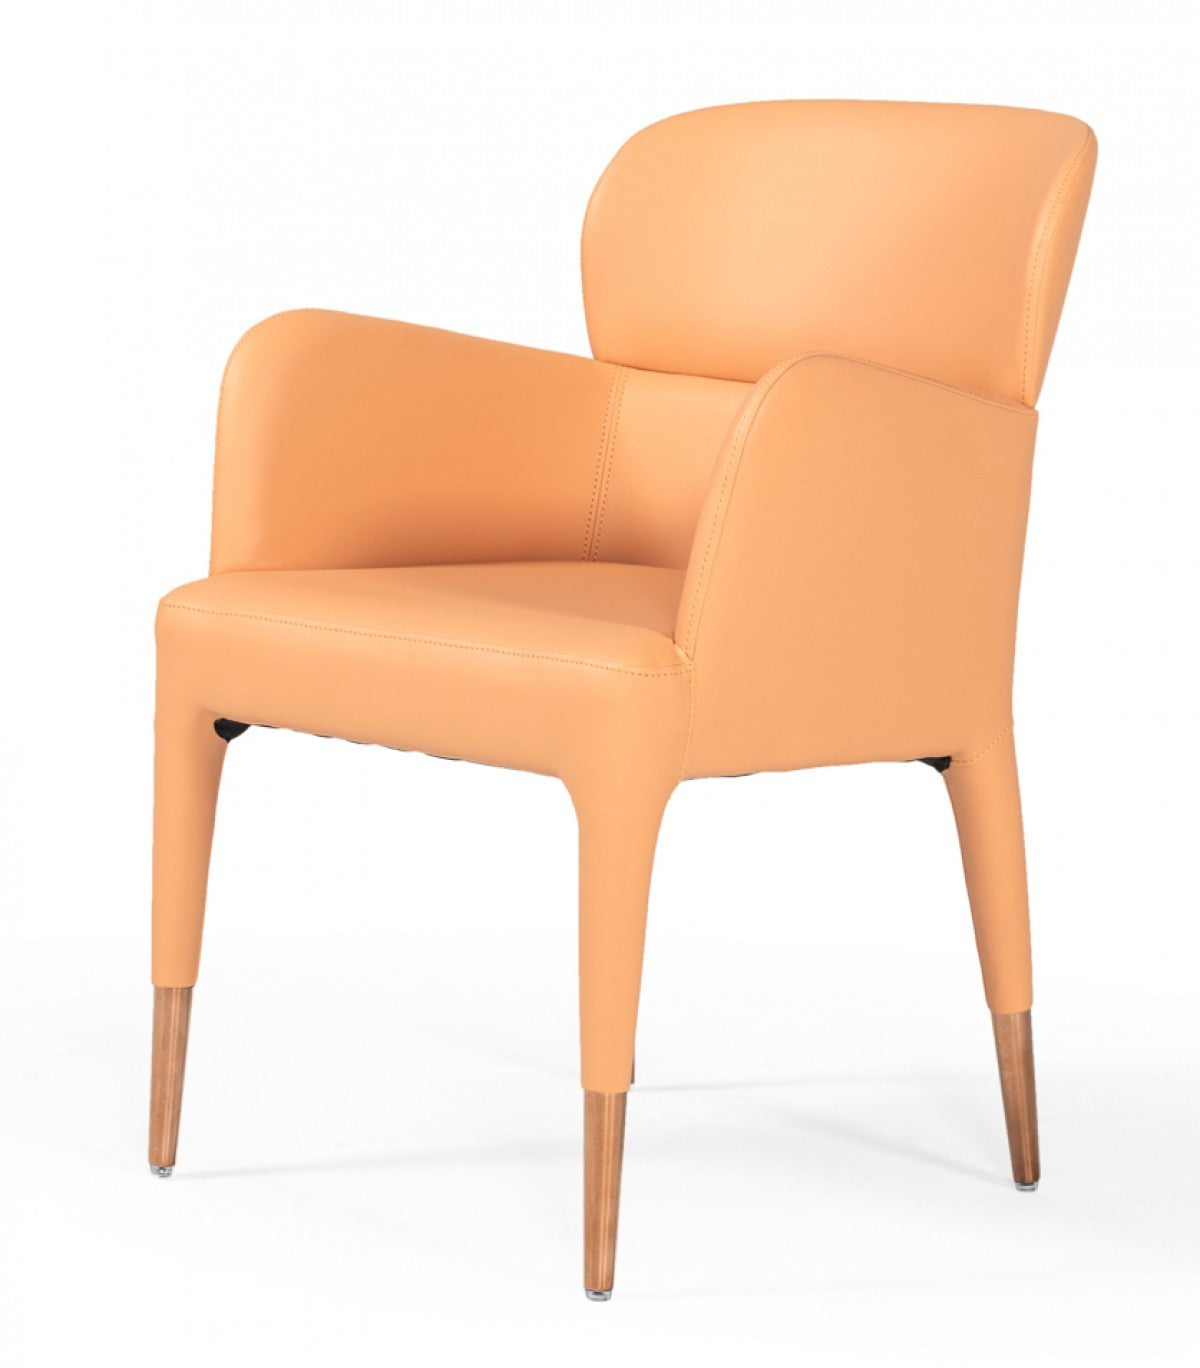 Peach Rosegold Dining Chair